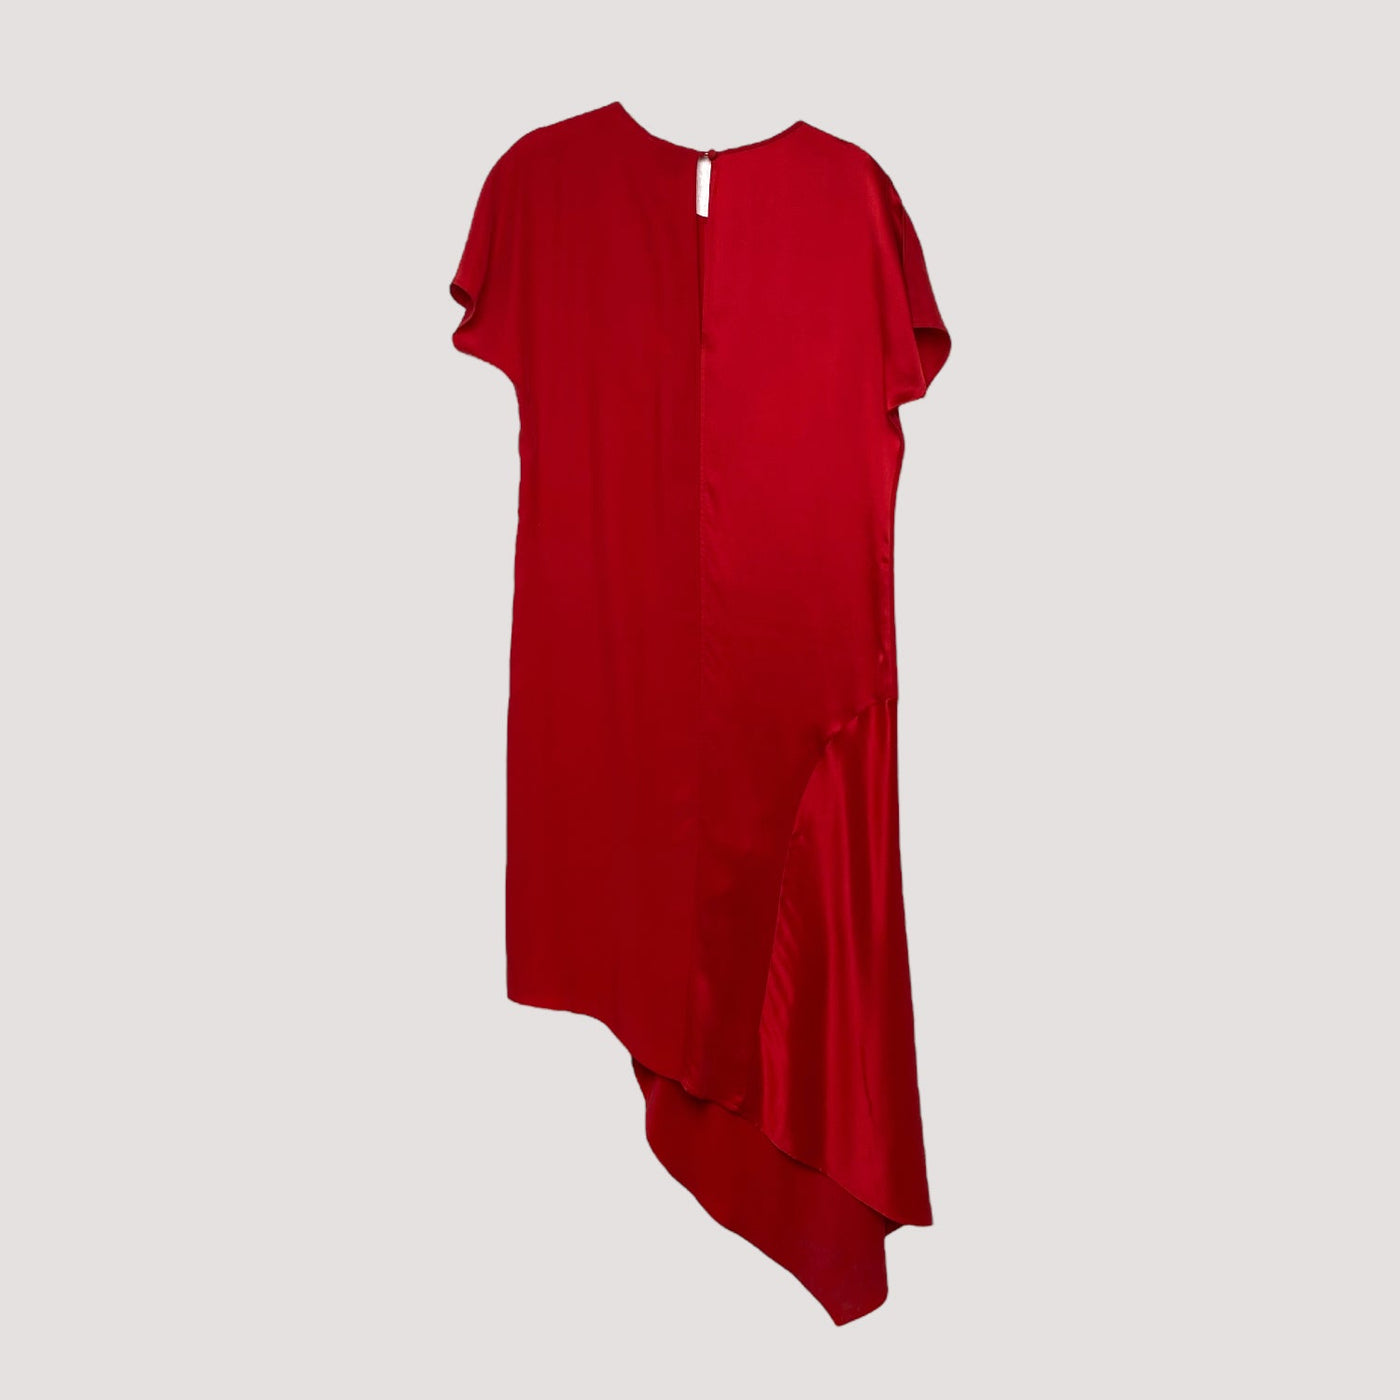 Studio Heijne dance silk dress, red | woman S